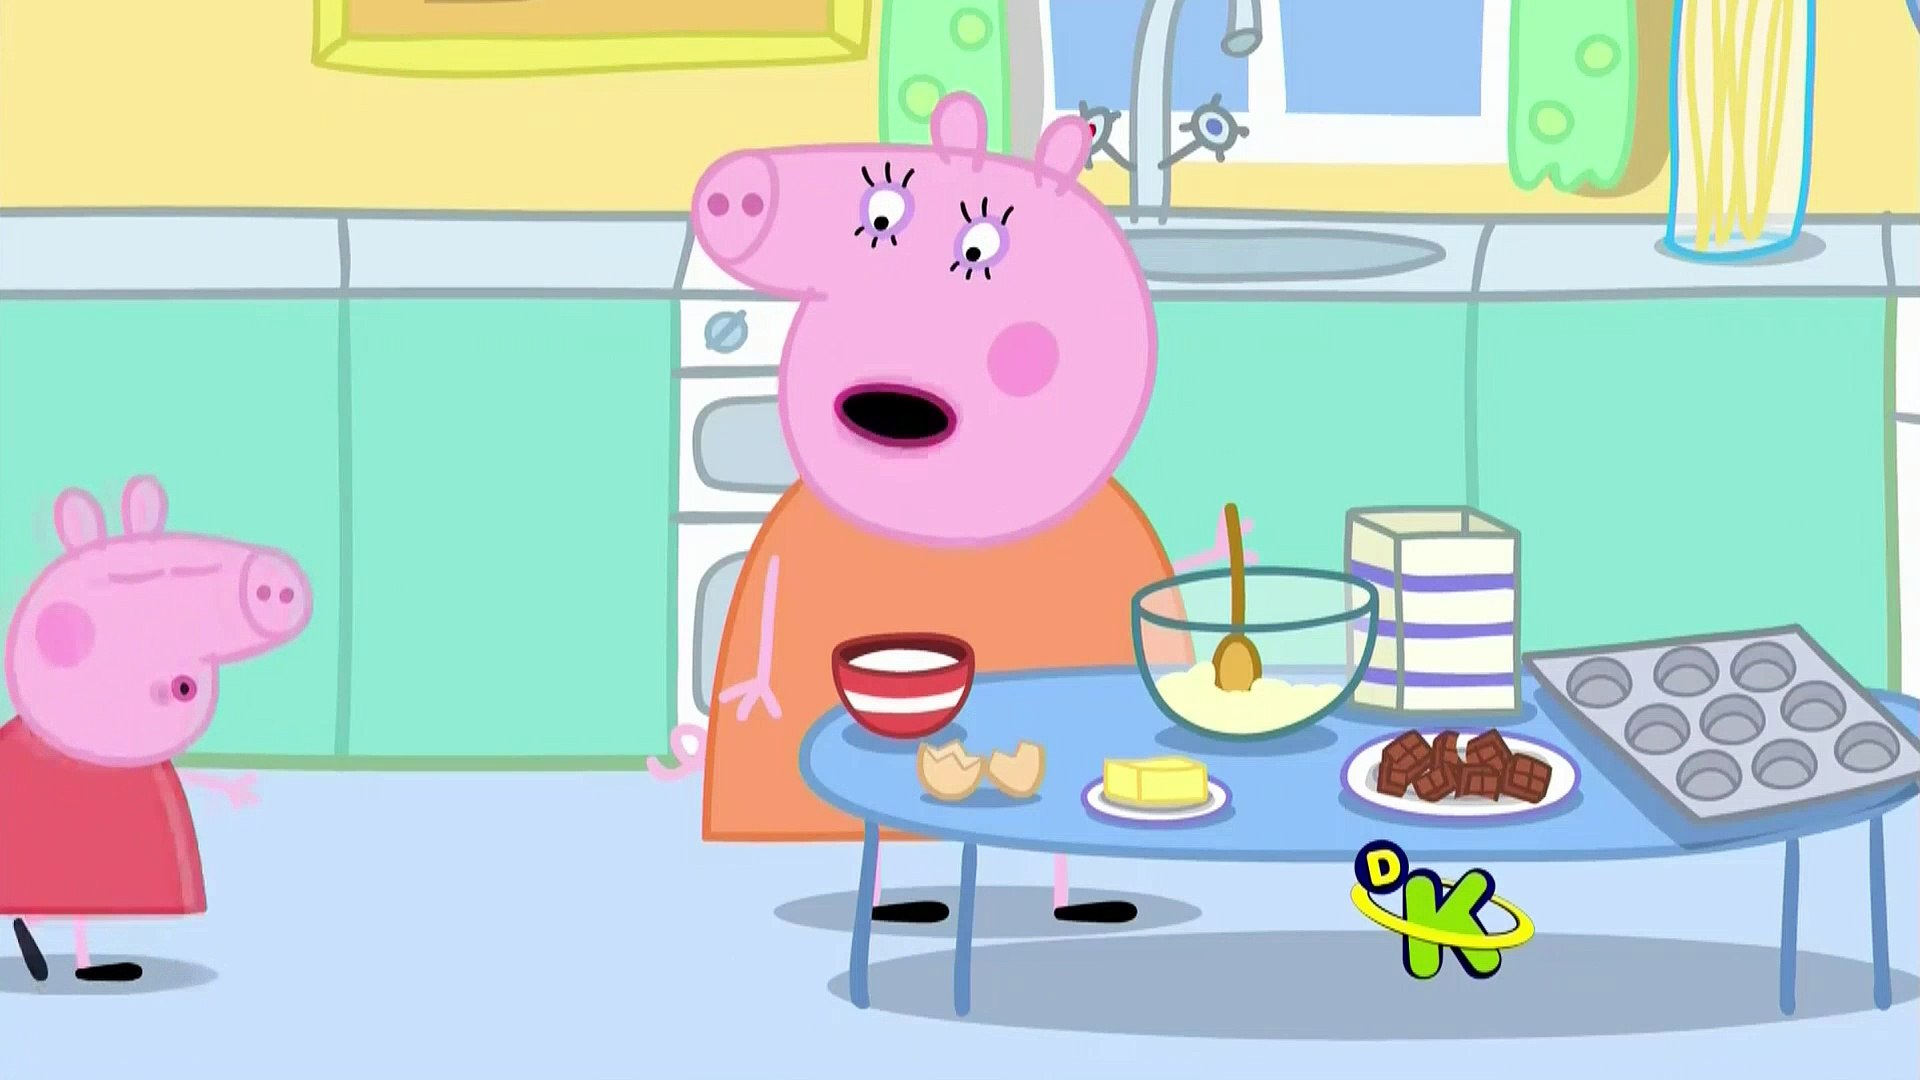 Peppa Pig Português Brasil ❤️ Peppa - HD - Desenhos Animados, Peppa Pig  Português Brasil ❤️ Peppa - HD - Desenhos Animados, By Peppa Pig em  Português Brasil - Canal Oficial